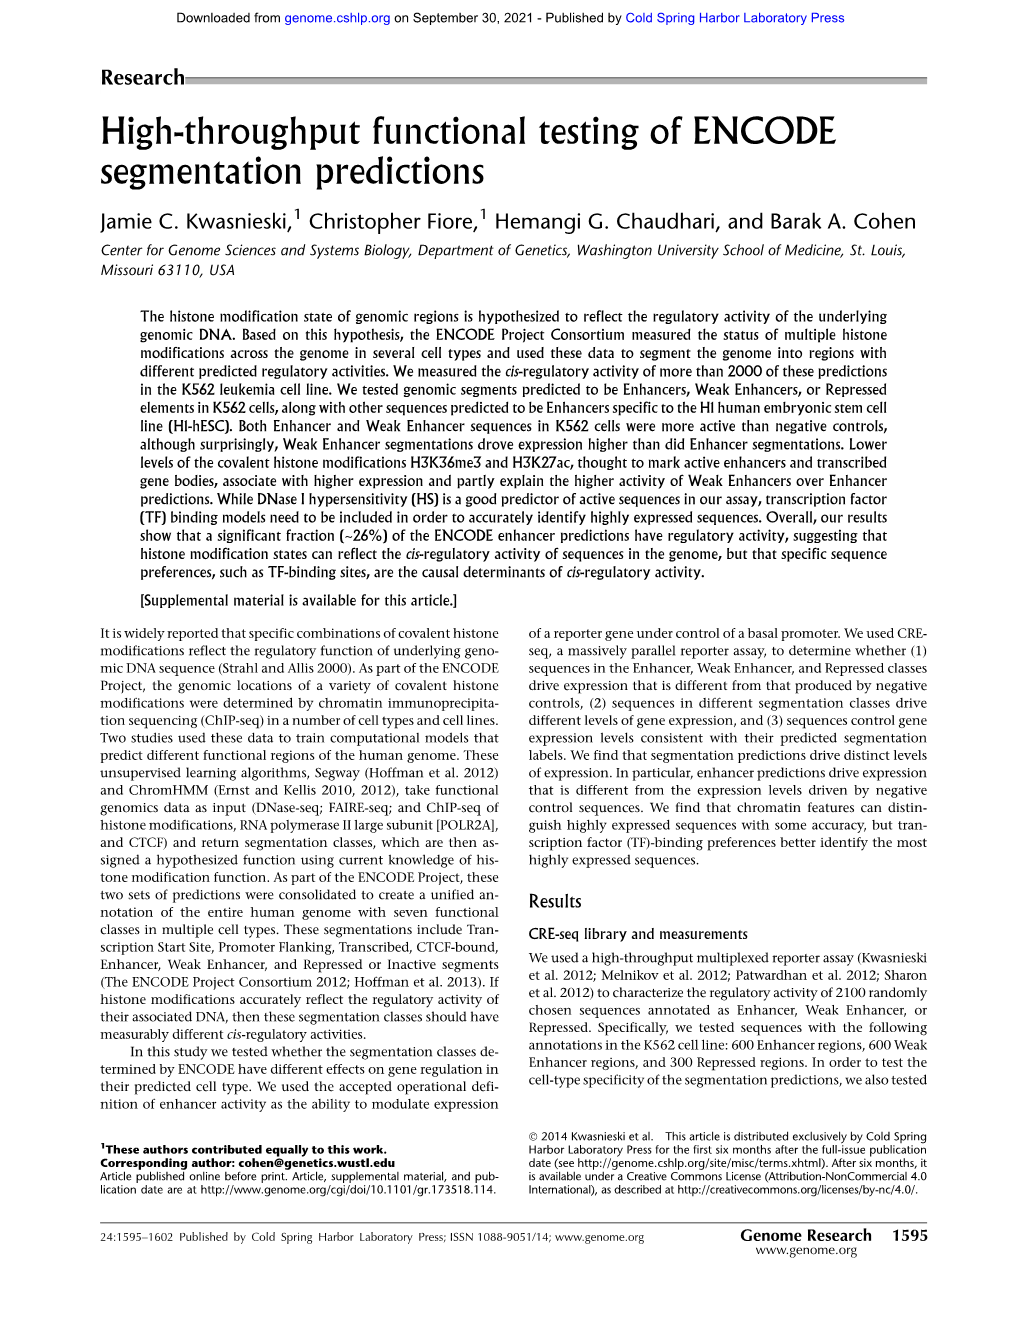 High-Throughput Functional Testing of ENCODE Segmentation Predictions